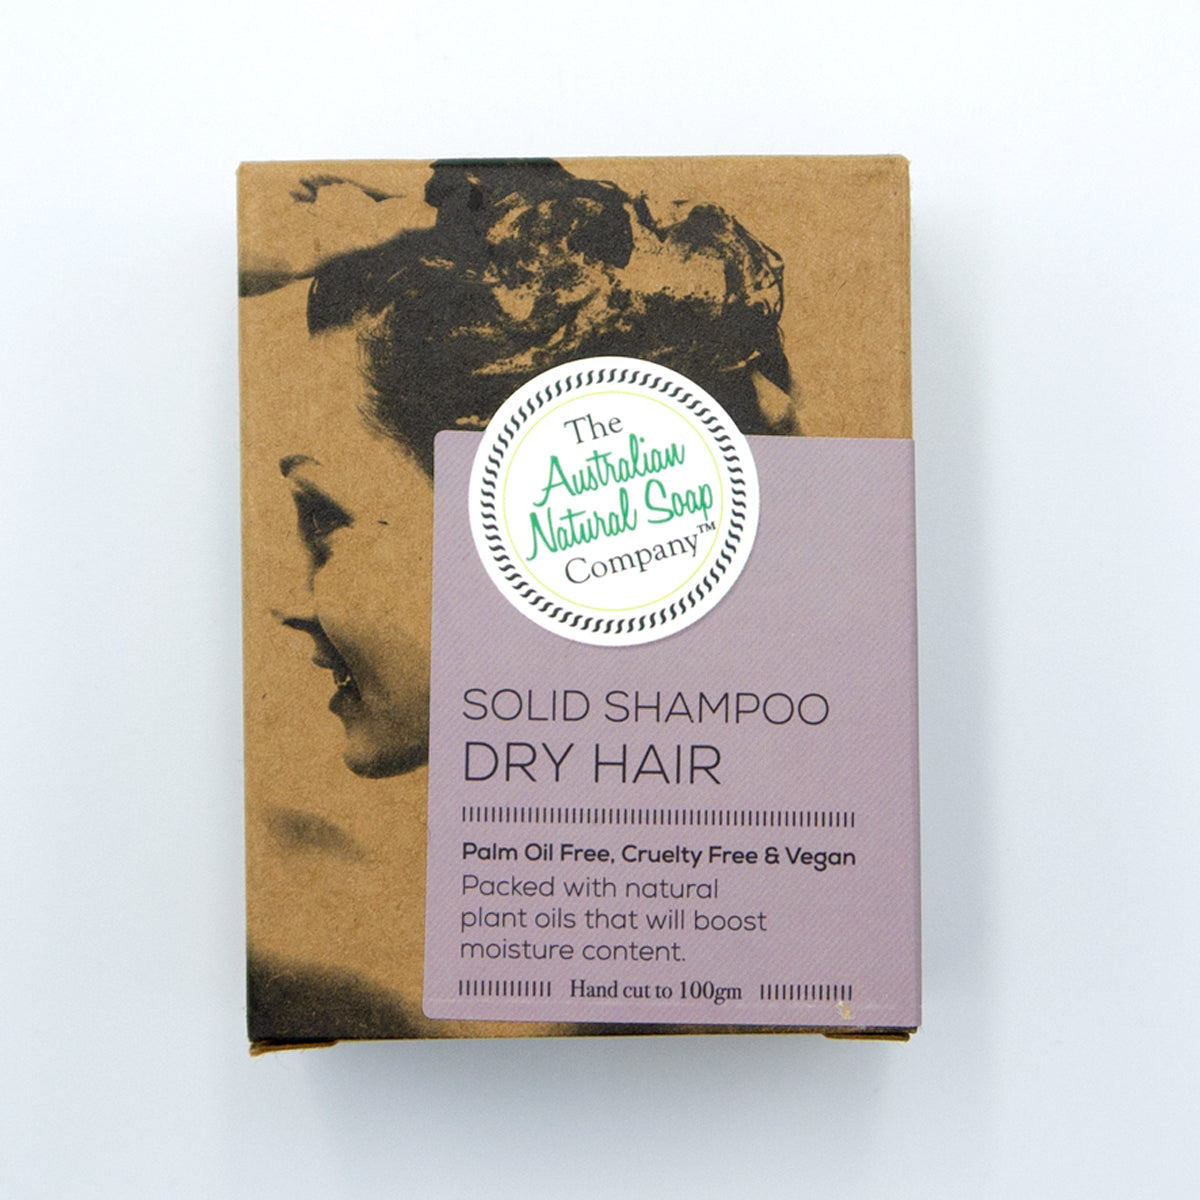 Solid Shampoo Dry Hair